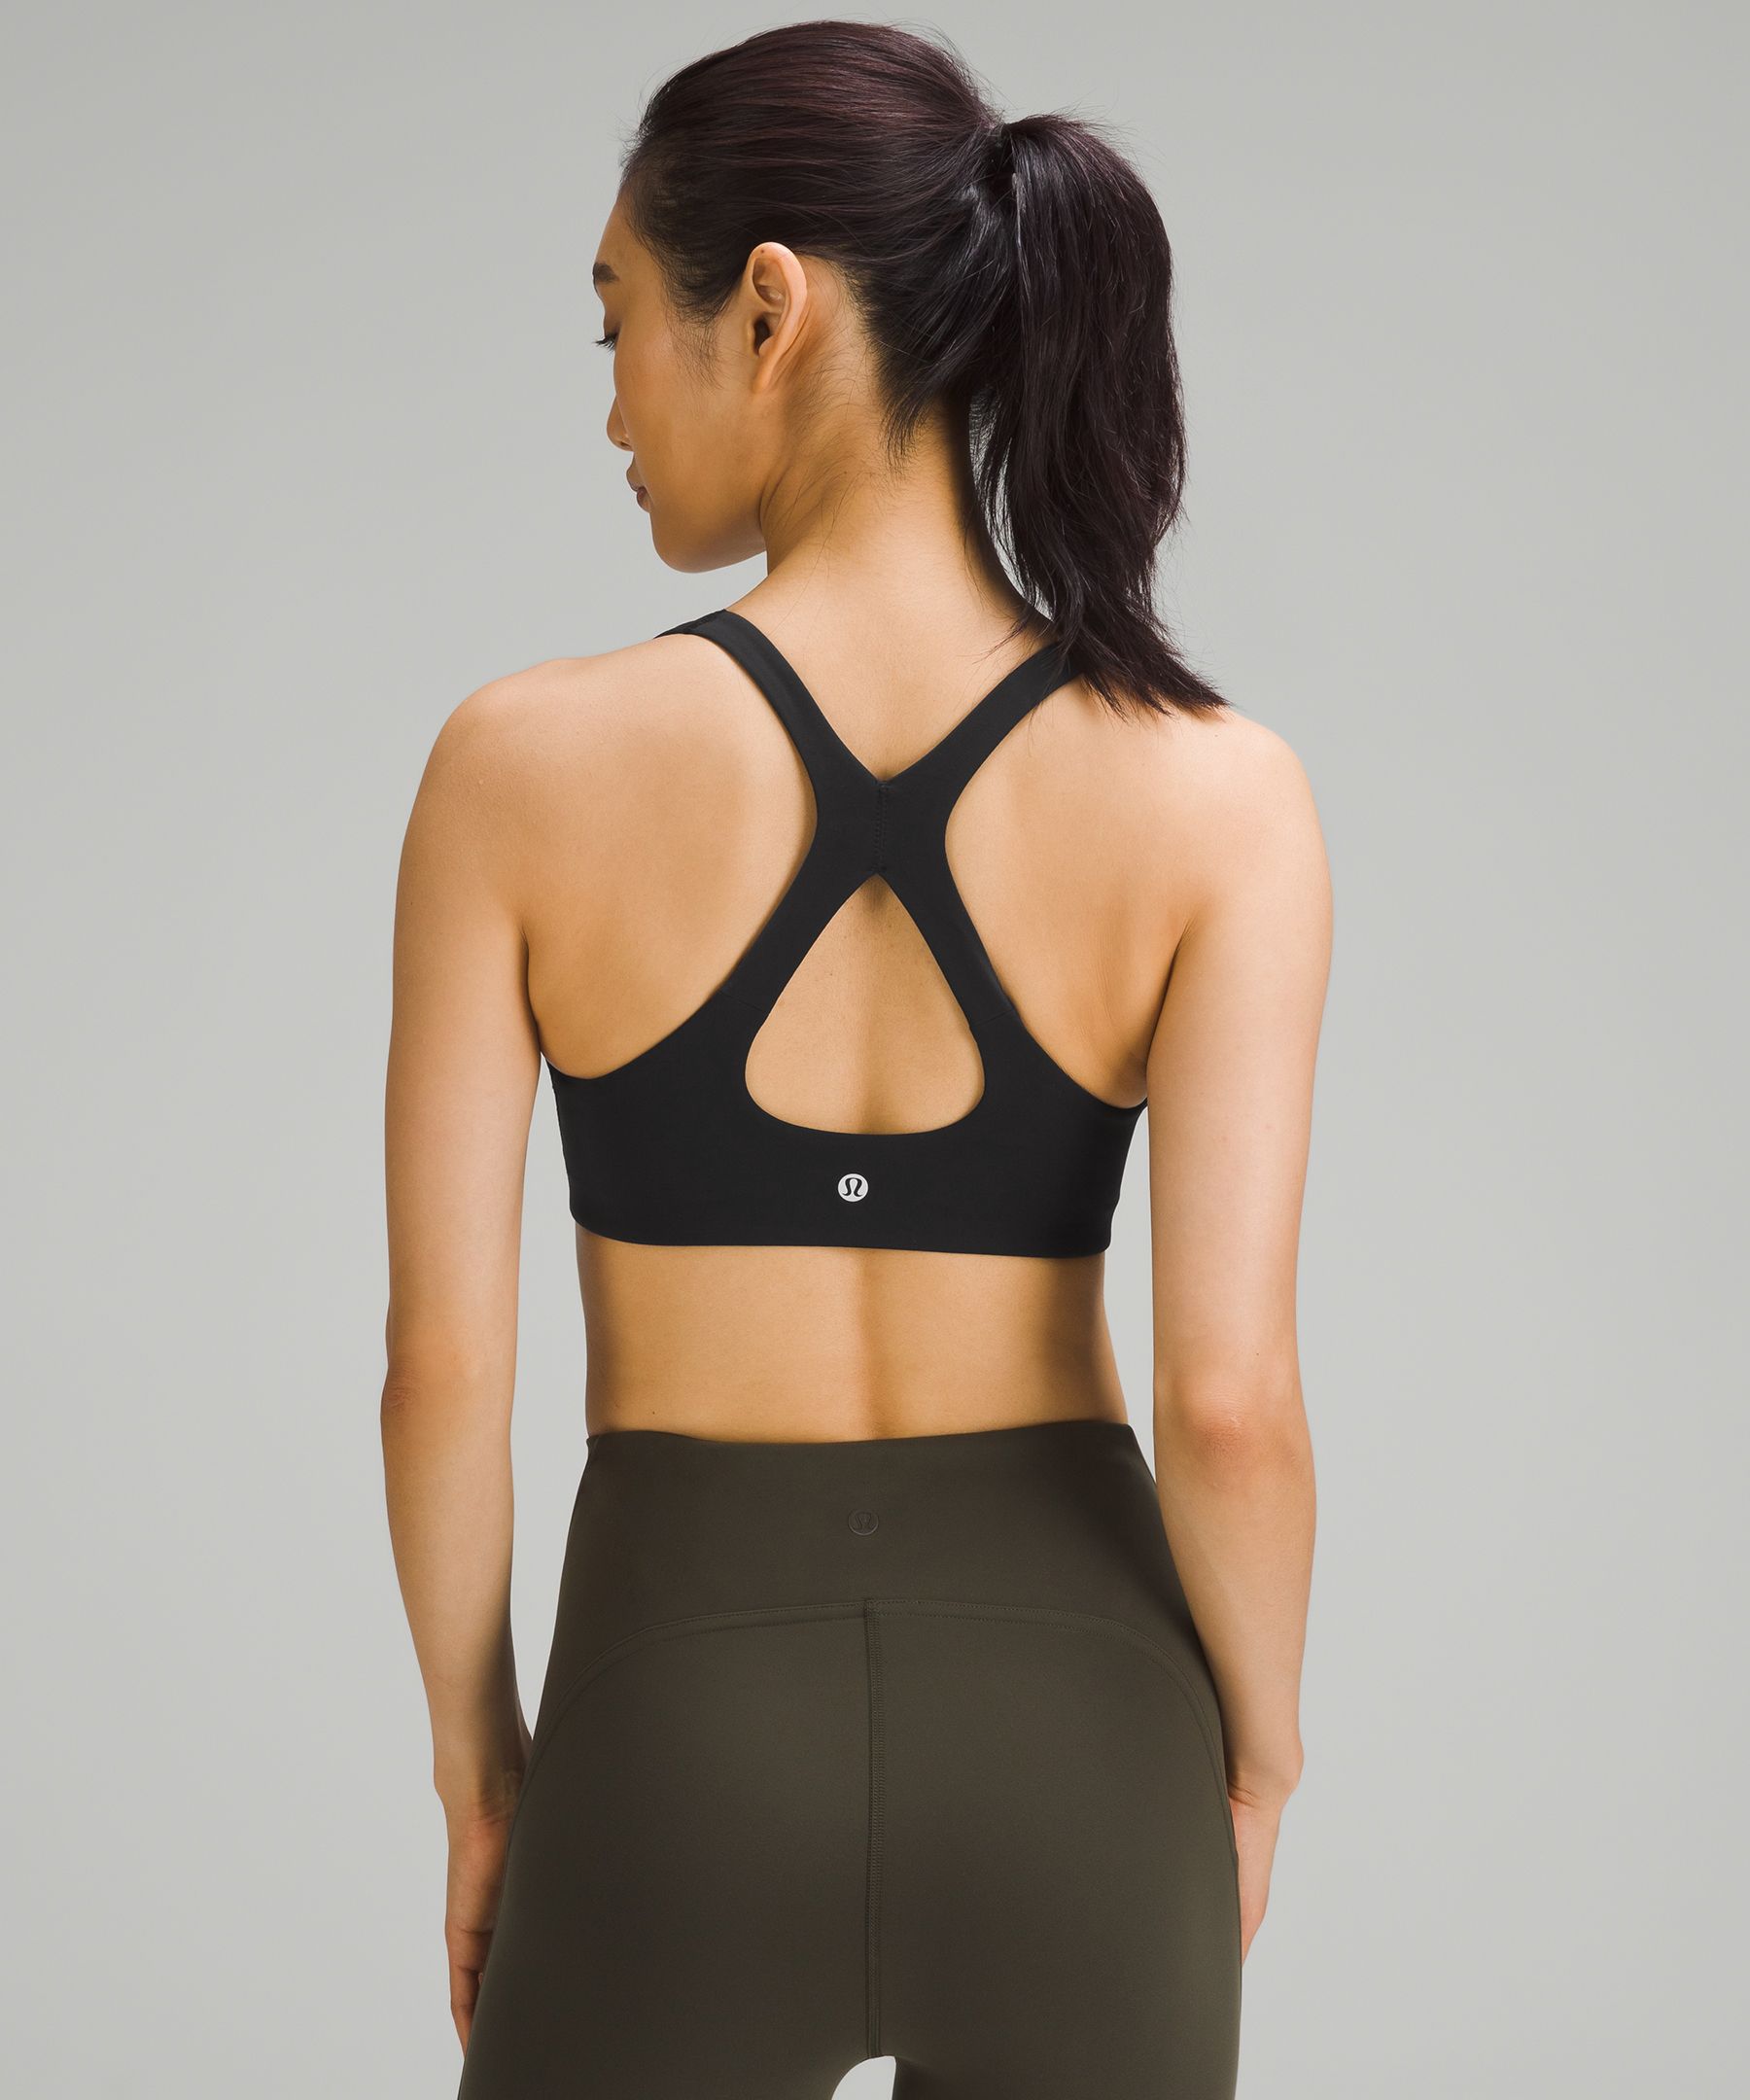 Buy GITGRNTH Comfy Cami Bra for Women Crop Top Yoga Bralette